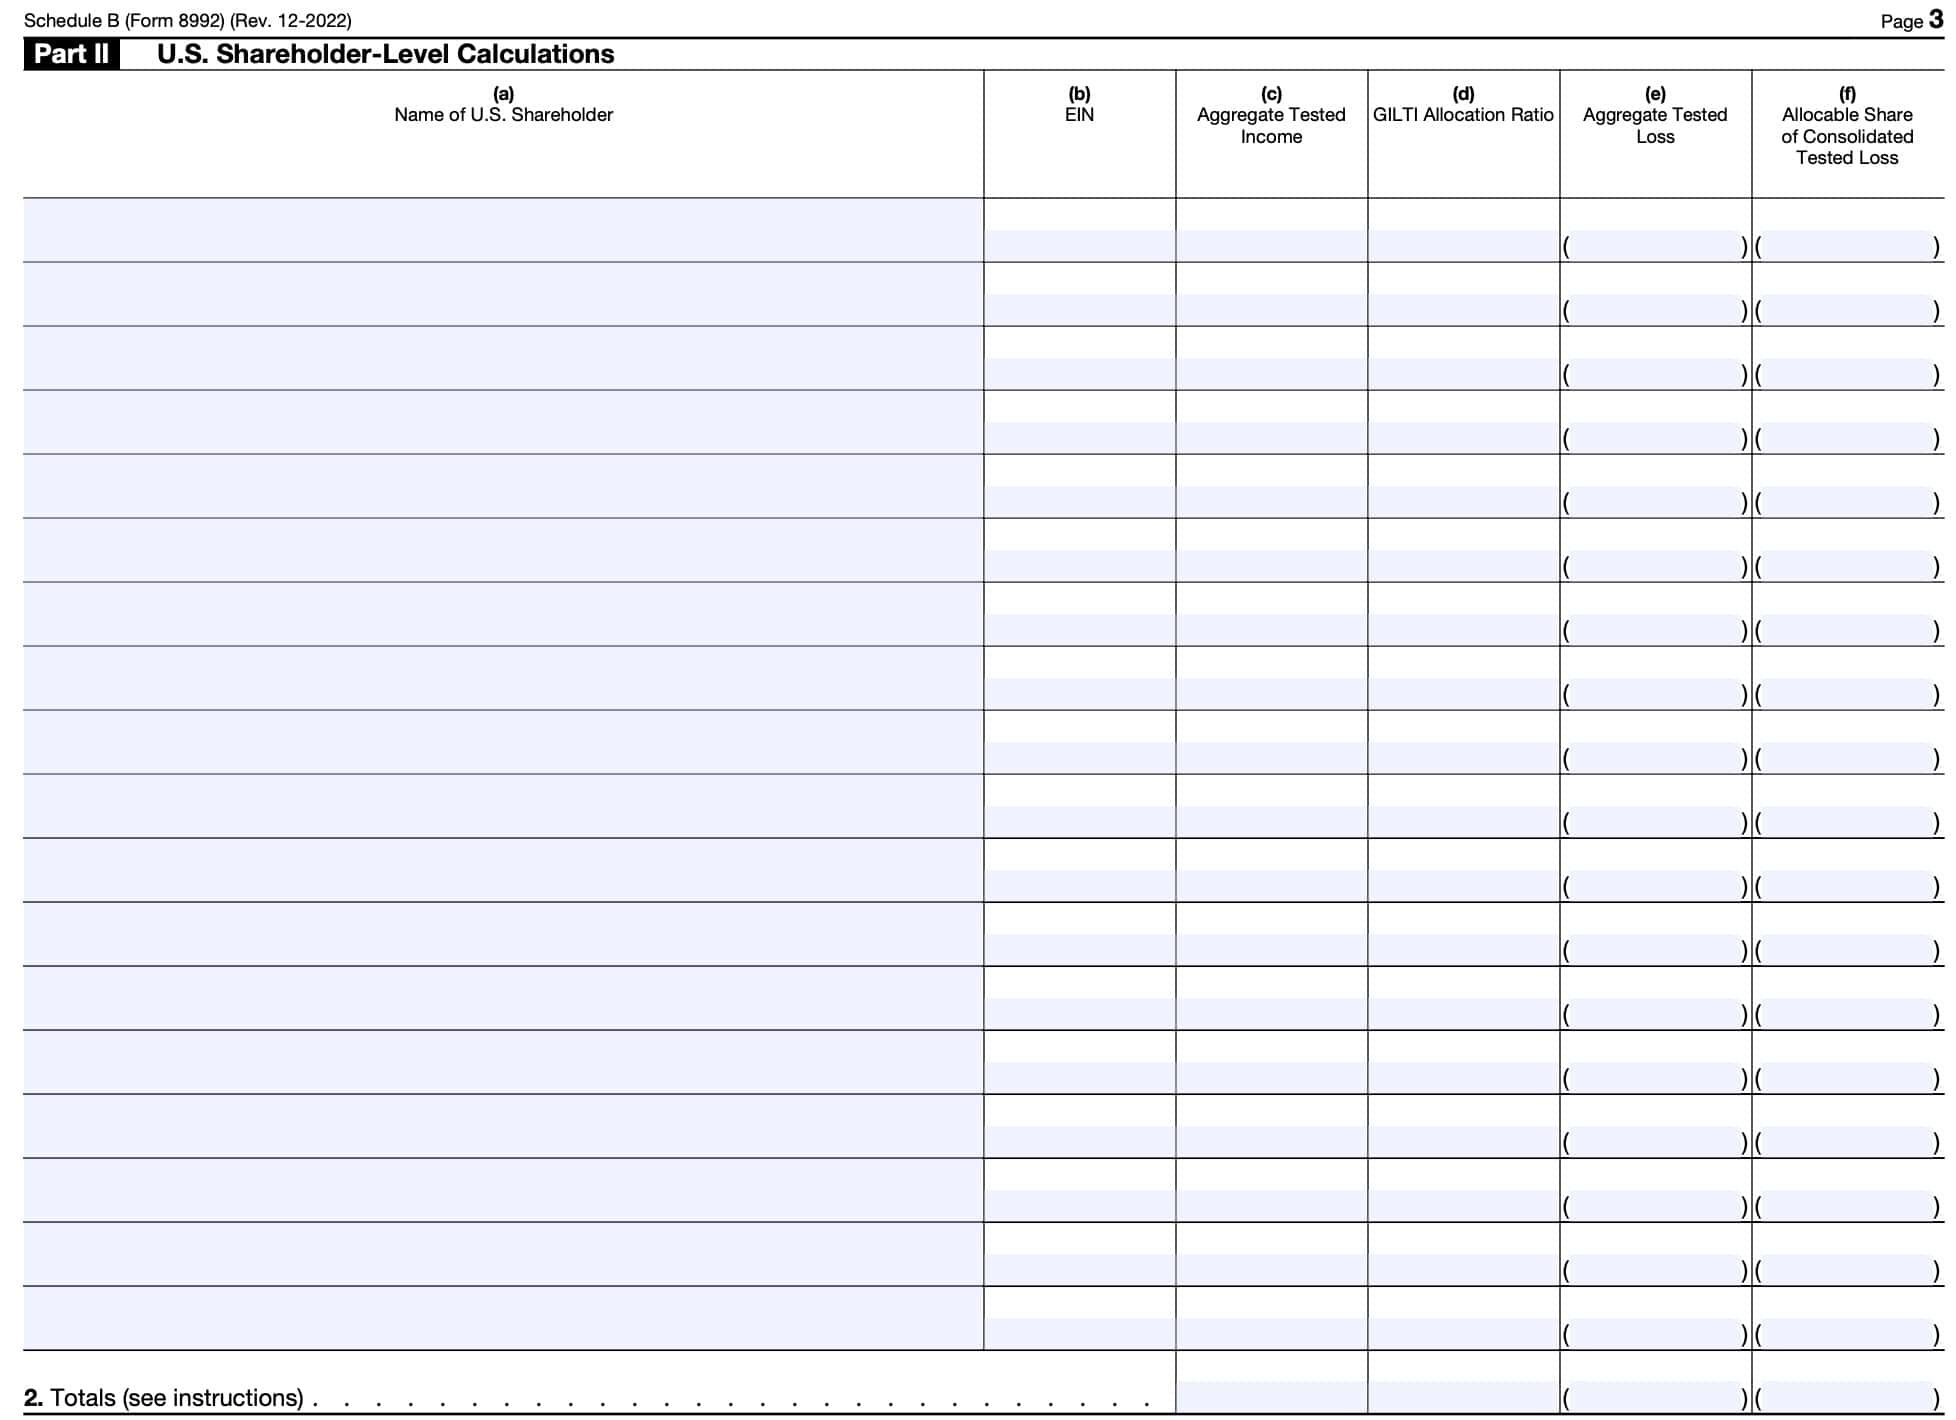 schedule b, part II: U.S. shareholder-level calculations, columns (a) through (f)